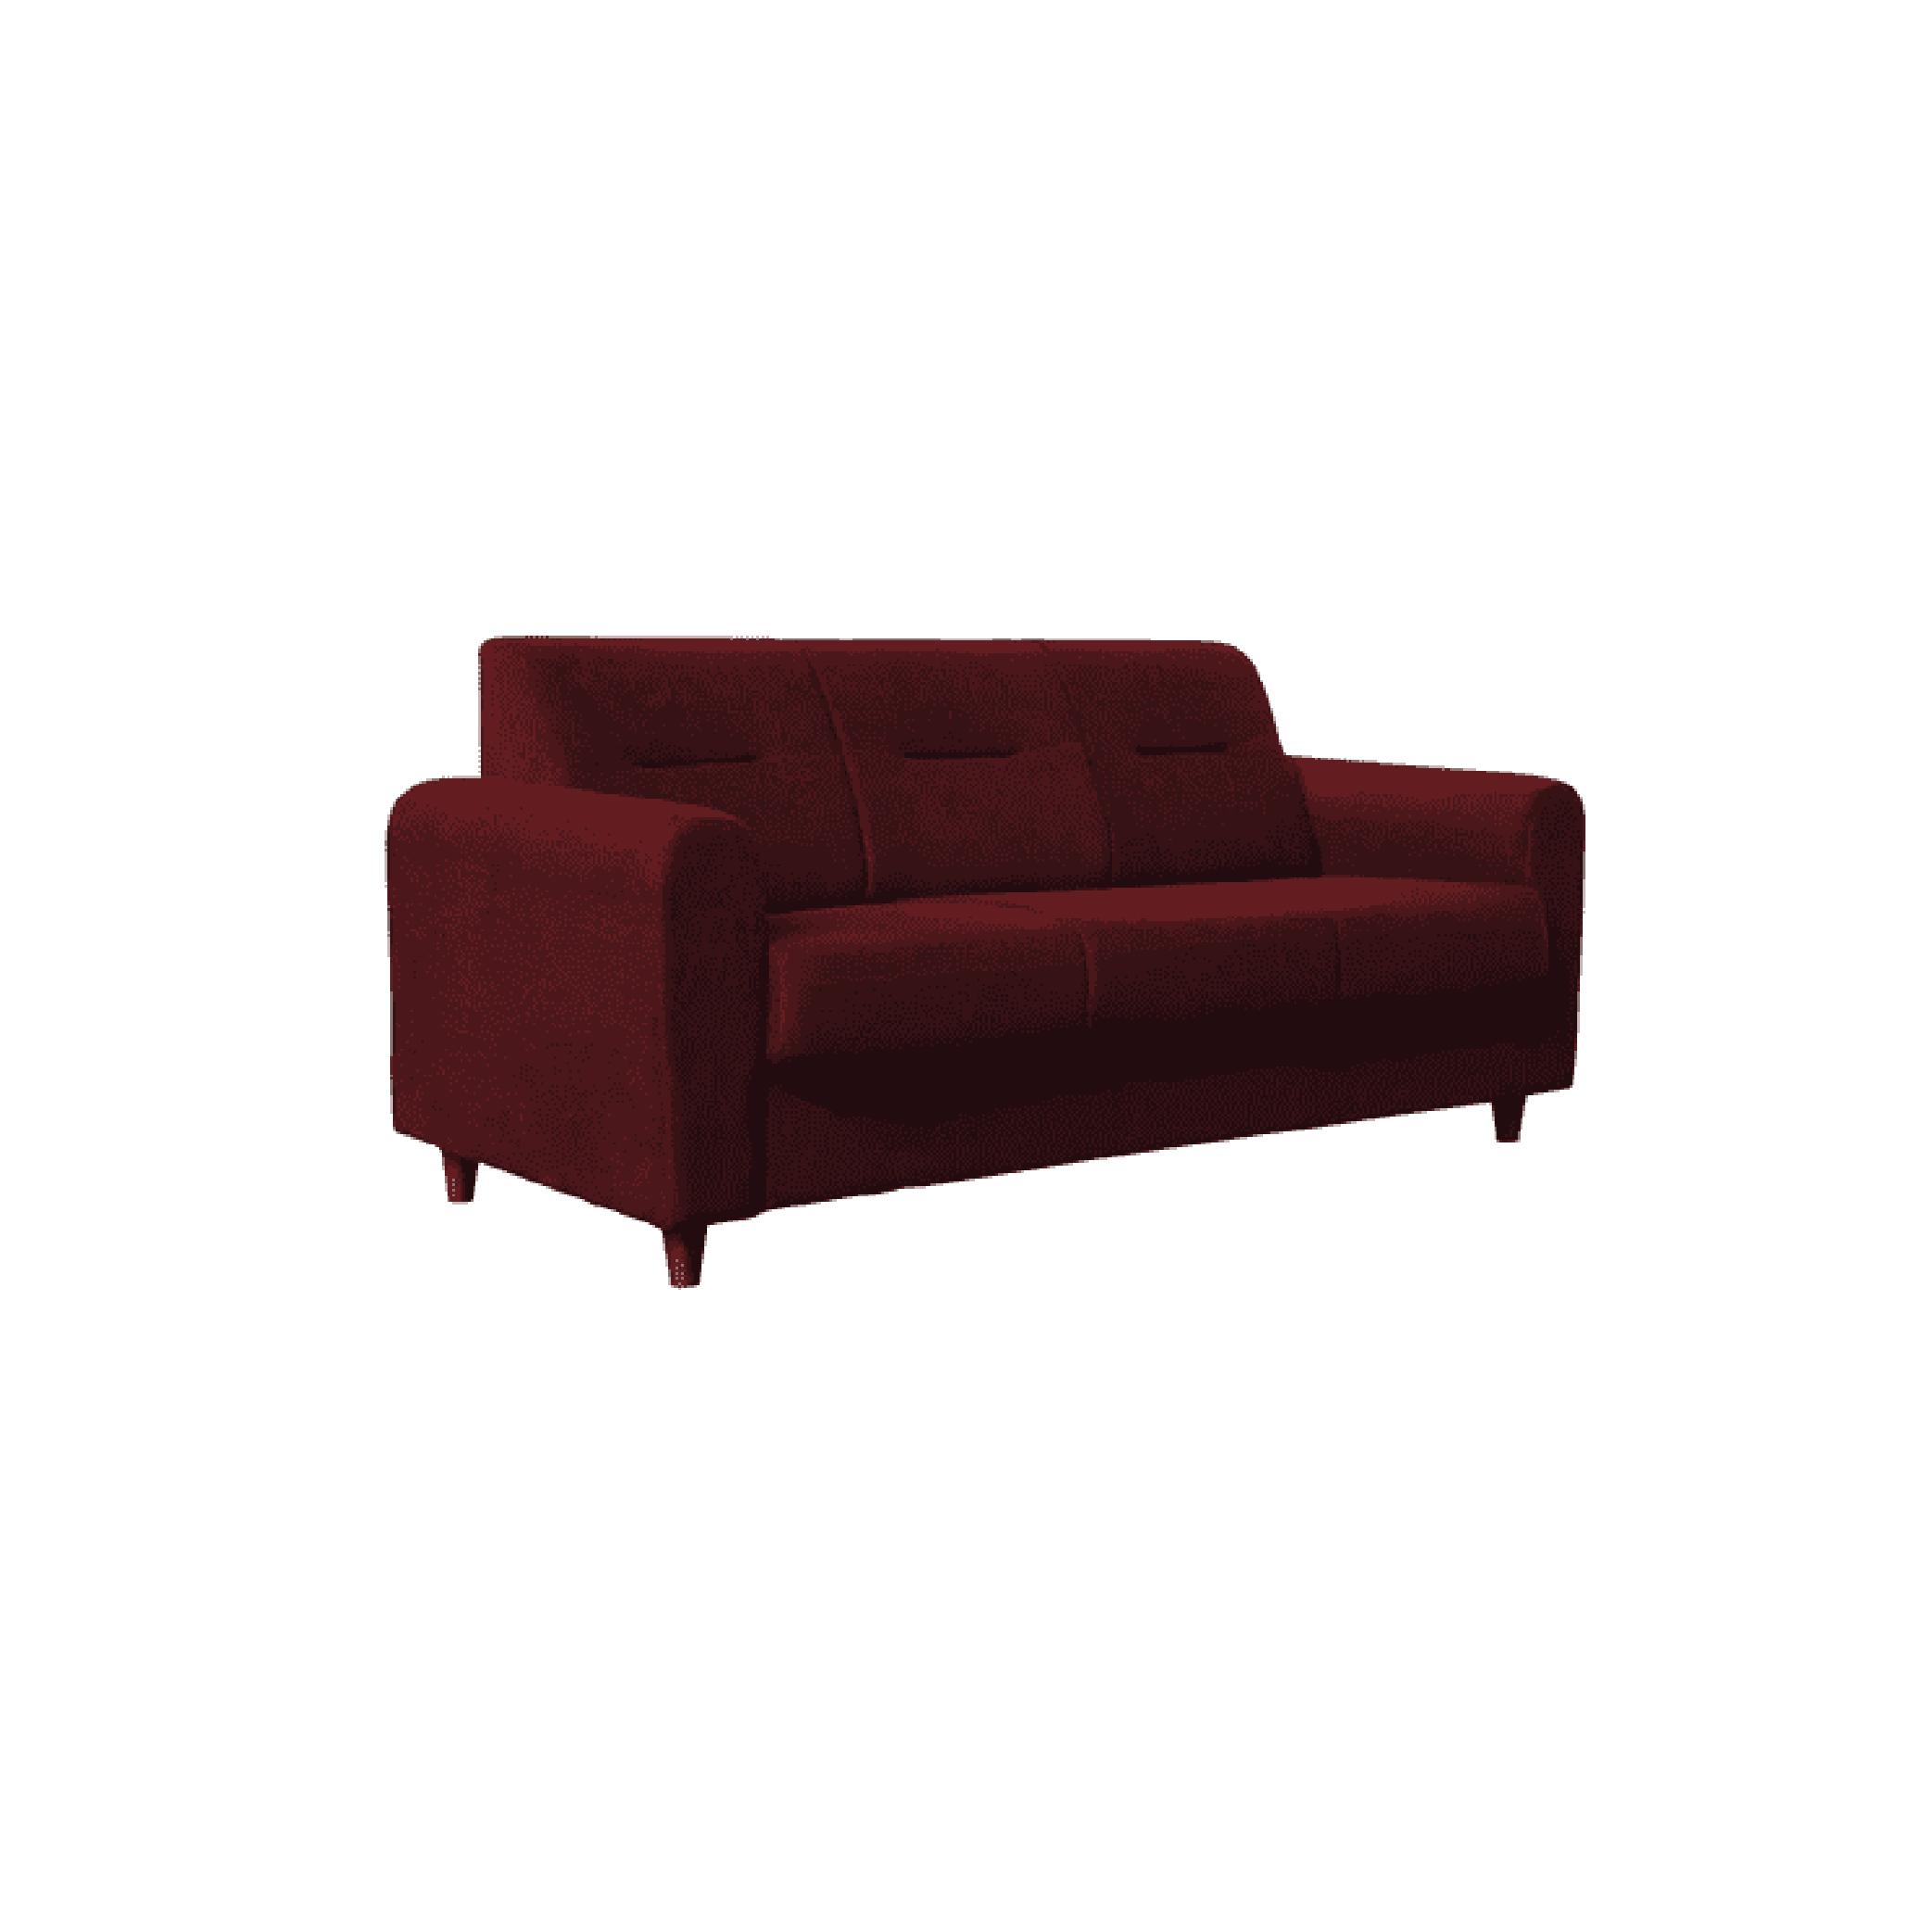 Nola Three Seater Sofa in Garnet Red Colour